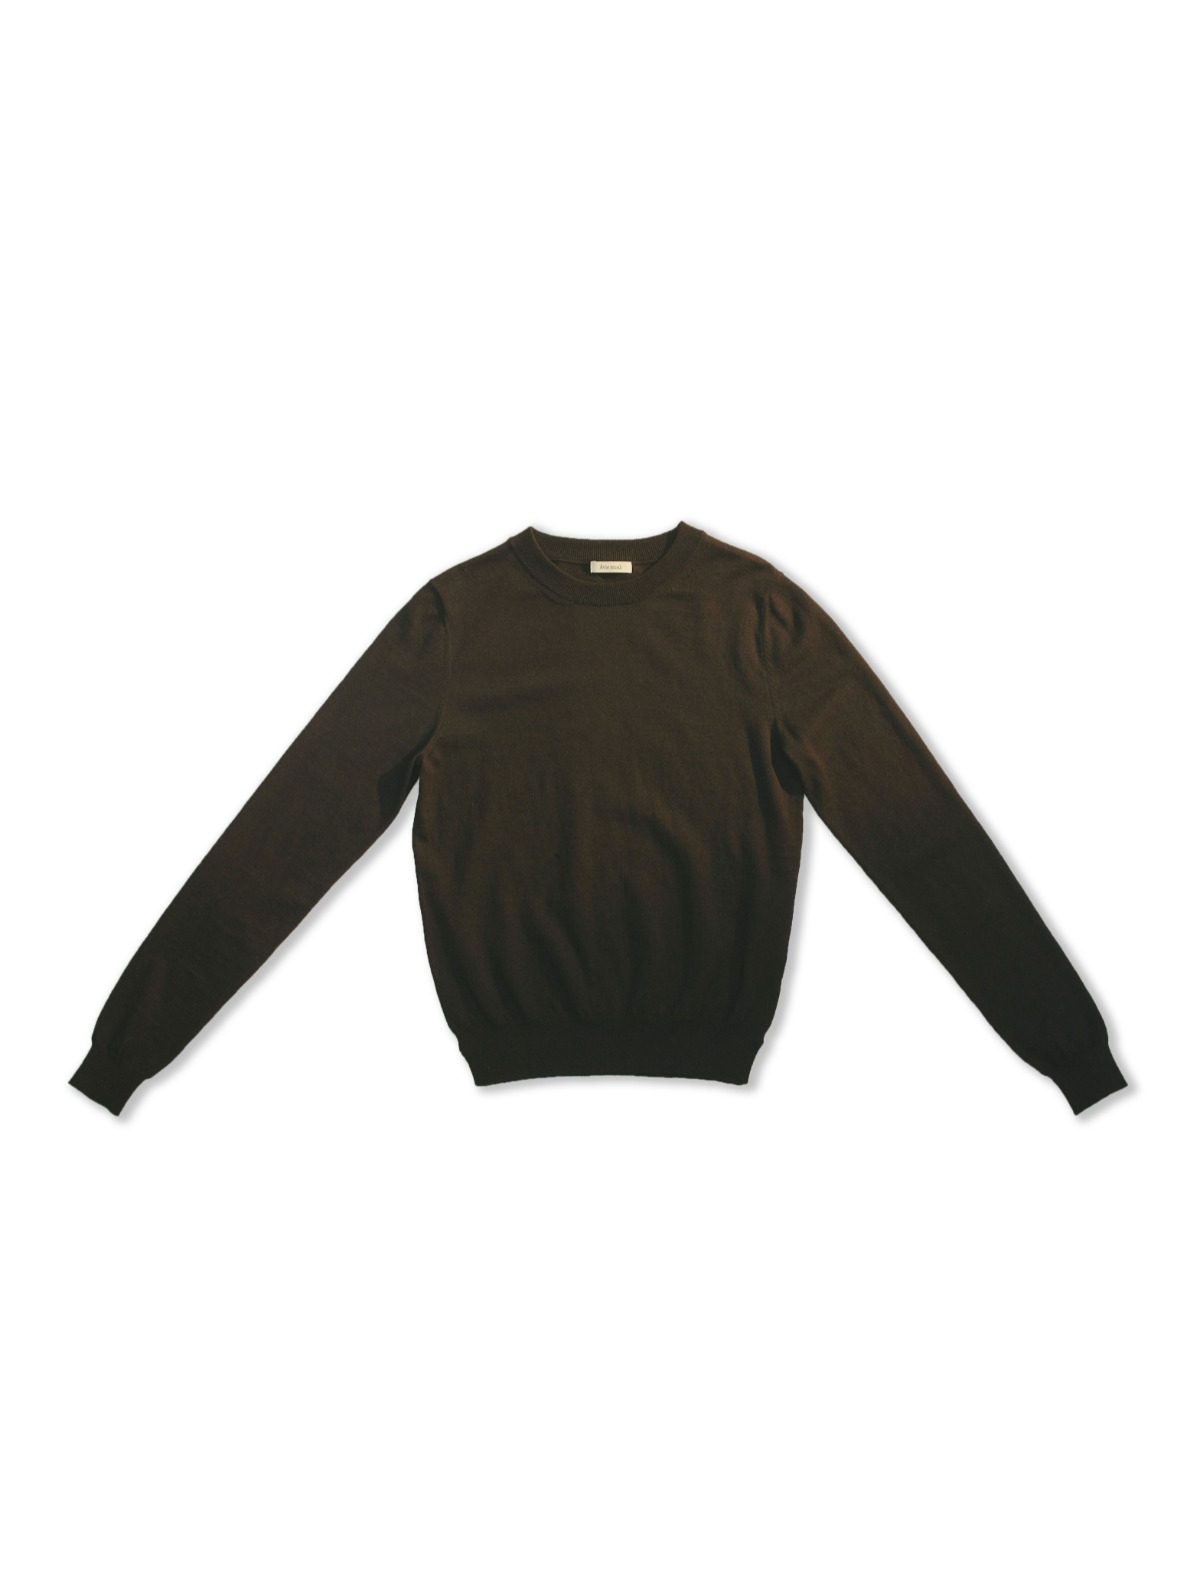 Cotton-Cashmere Sweater (Black)